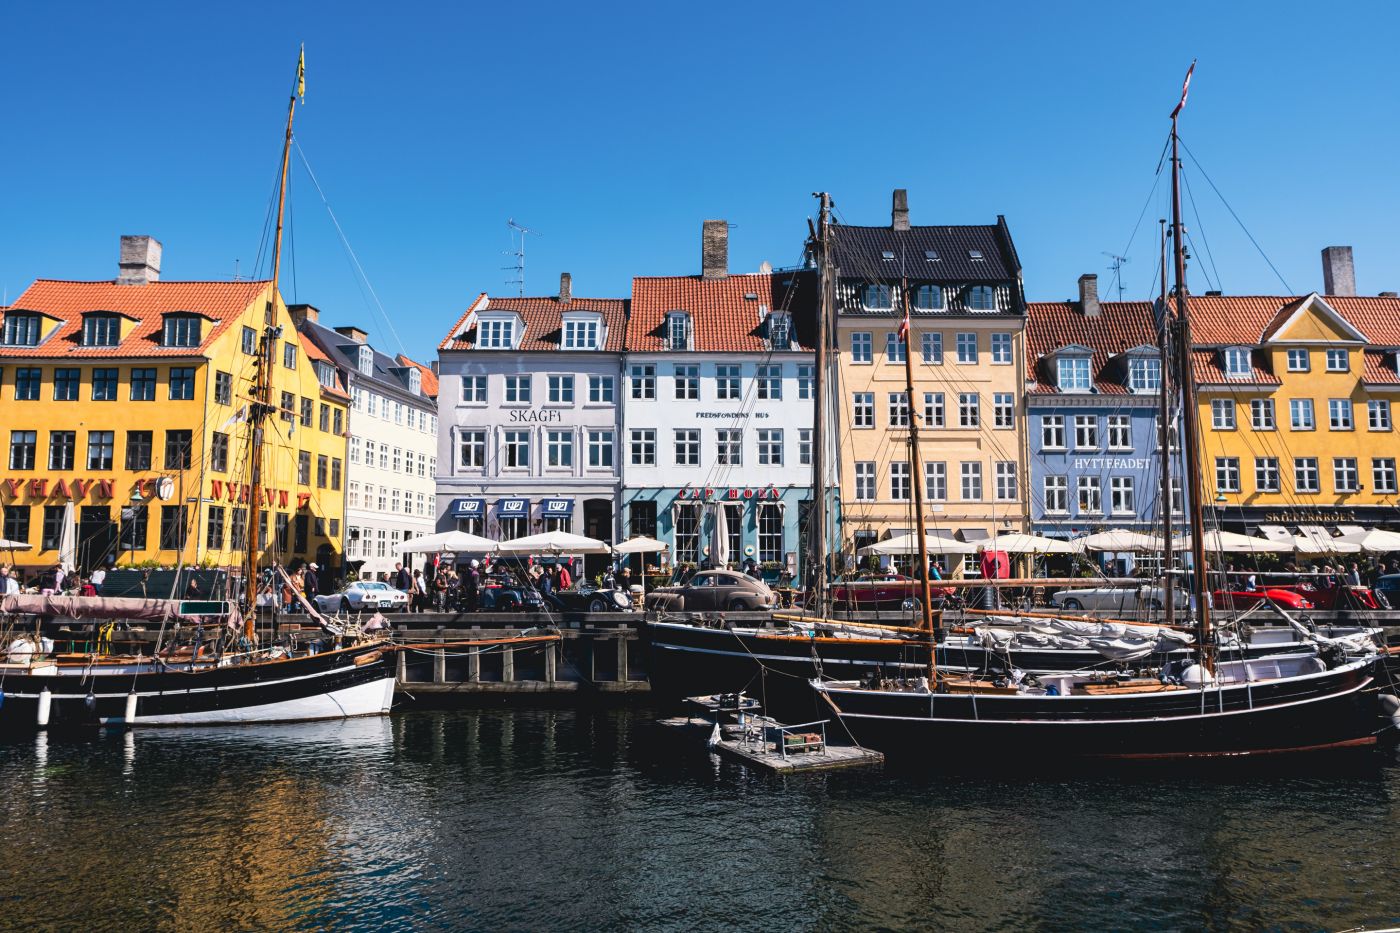 Nayhavn waterfront and canal in Copenhagen